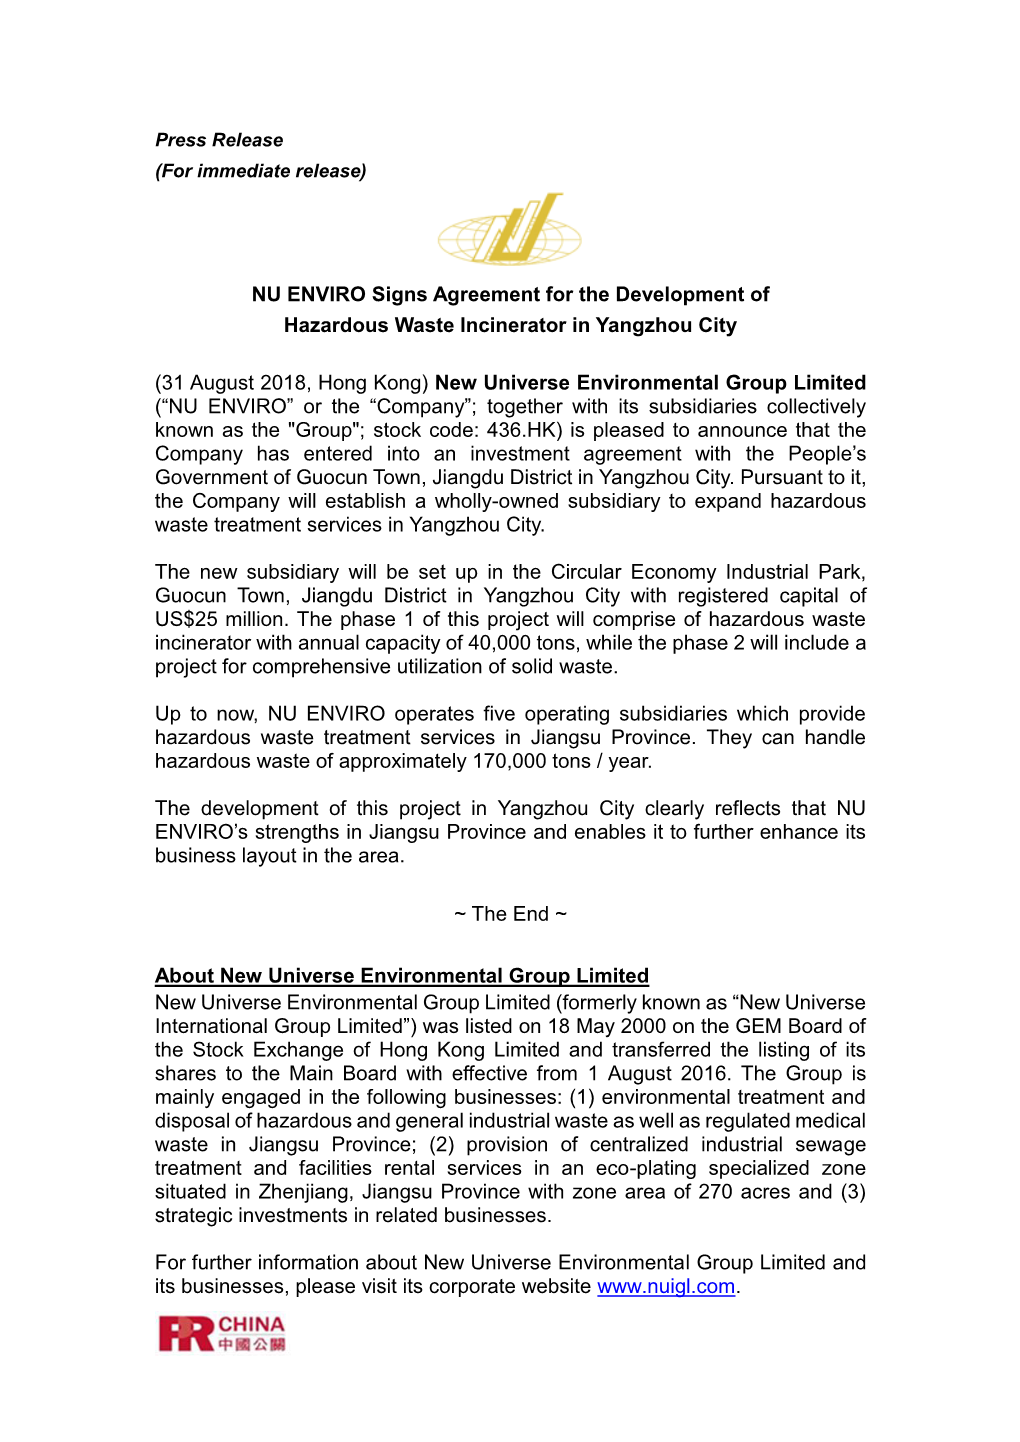 NU ENVIRO Signs Agreement for the Development of Hazardous Waste Incinerator in Yangzhou City